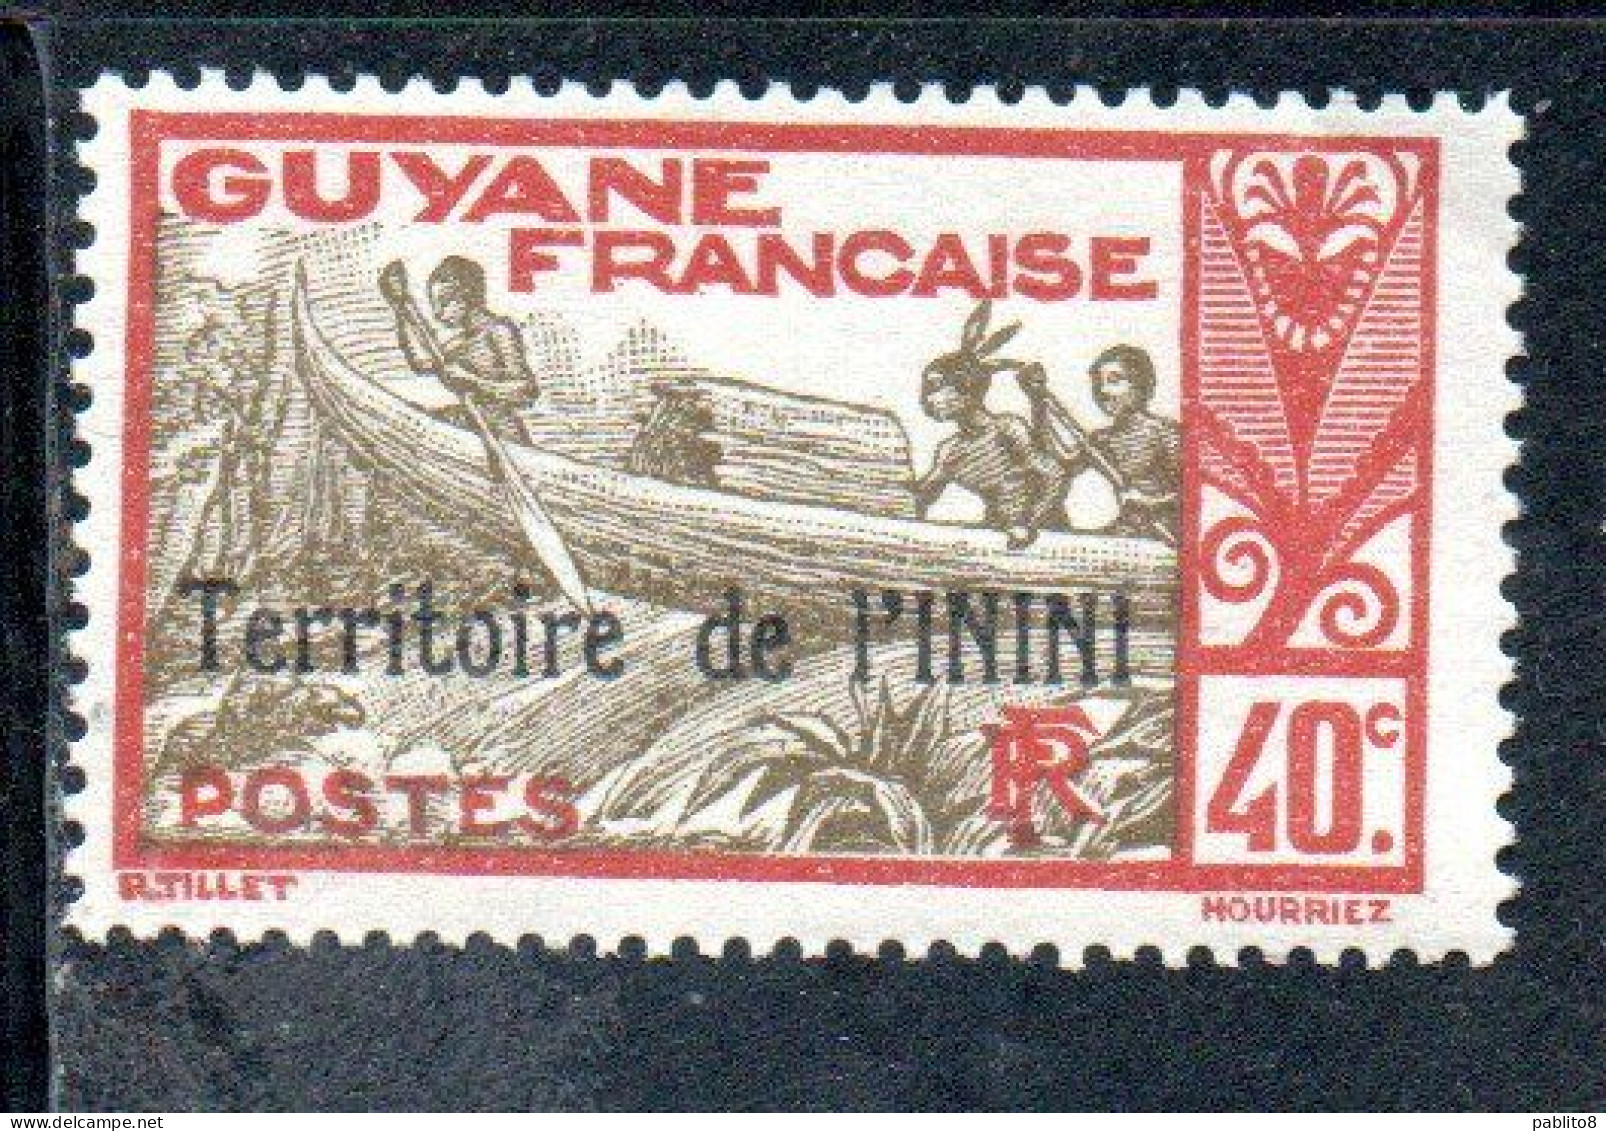 GUYANE FRANCAISE TERRITOIRE DE L'ININI OVERPRINTED SURCHARGE 1932 1940 SHOOTING RAPIDS MARONI RIVER 40c MNH - Neufs